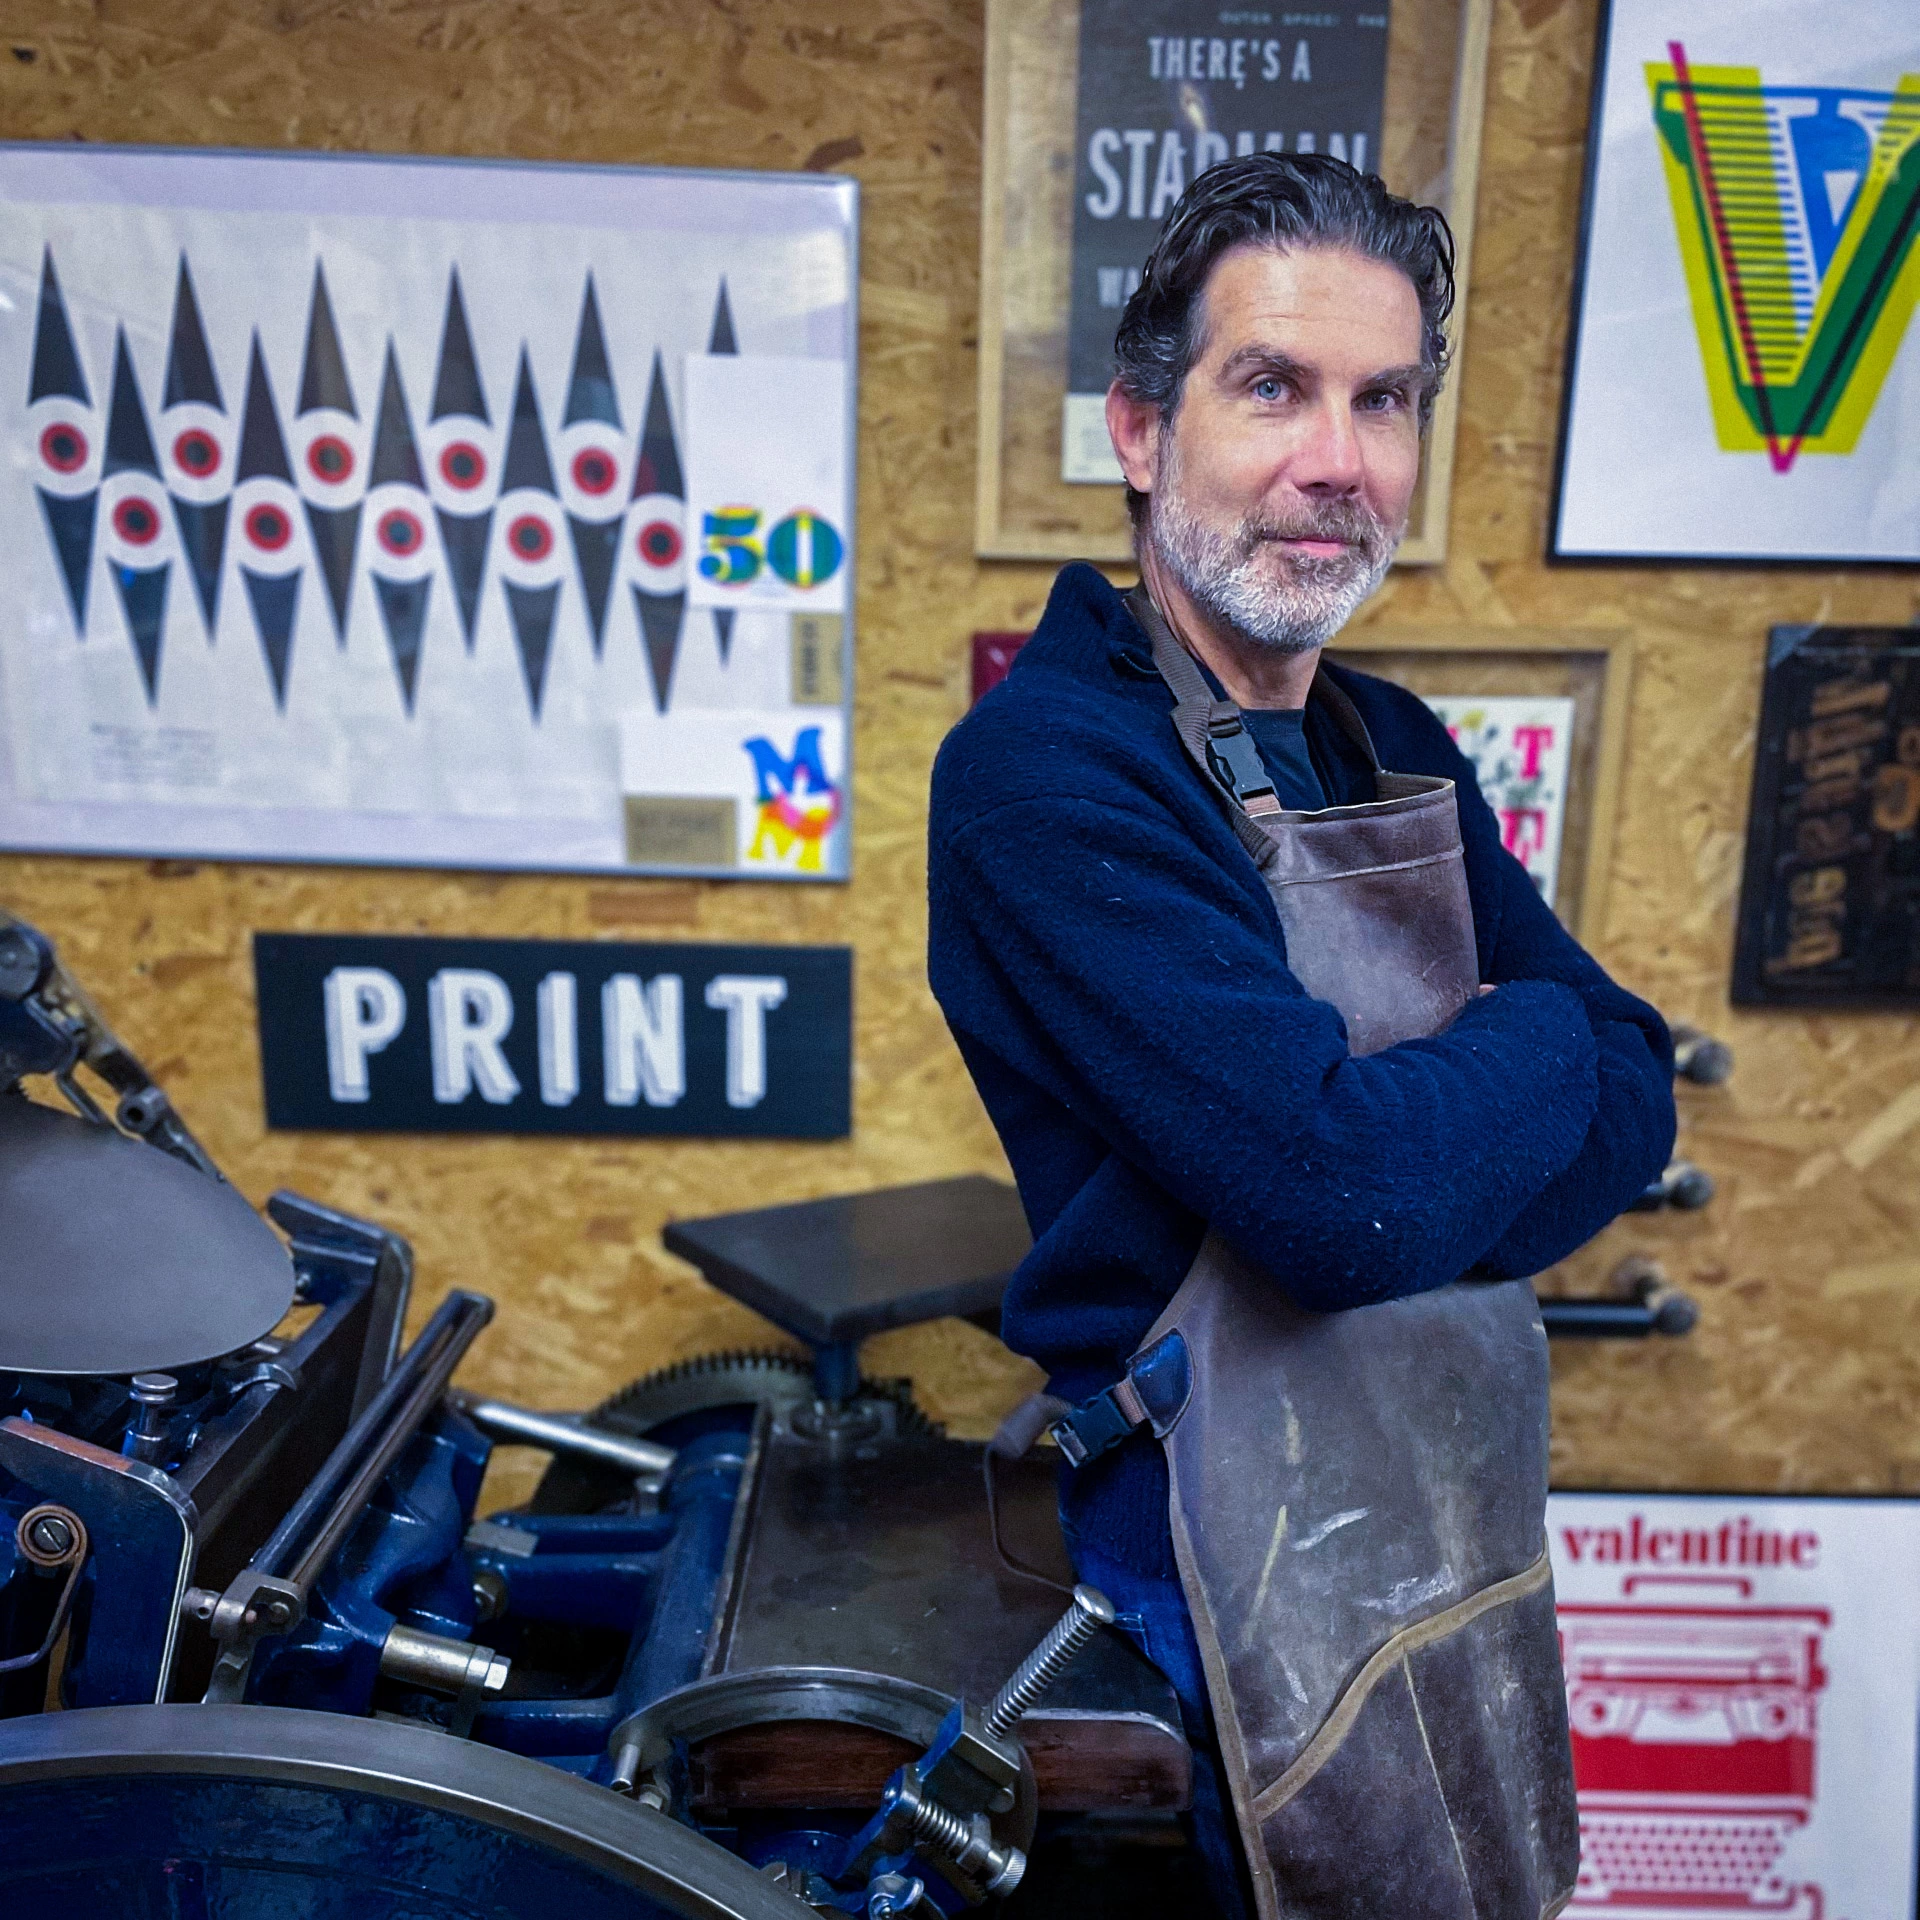 Meet Paul, owner and print enthusiast of Studio 55 Letterpress